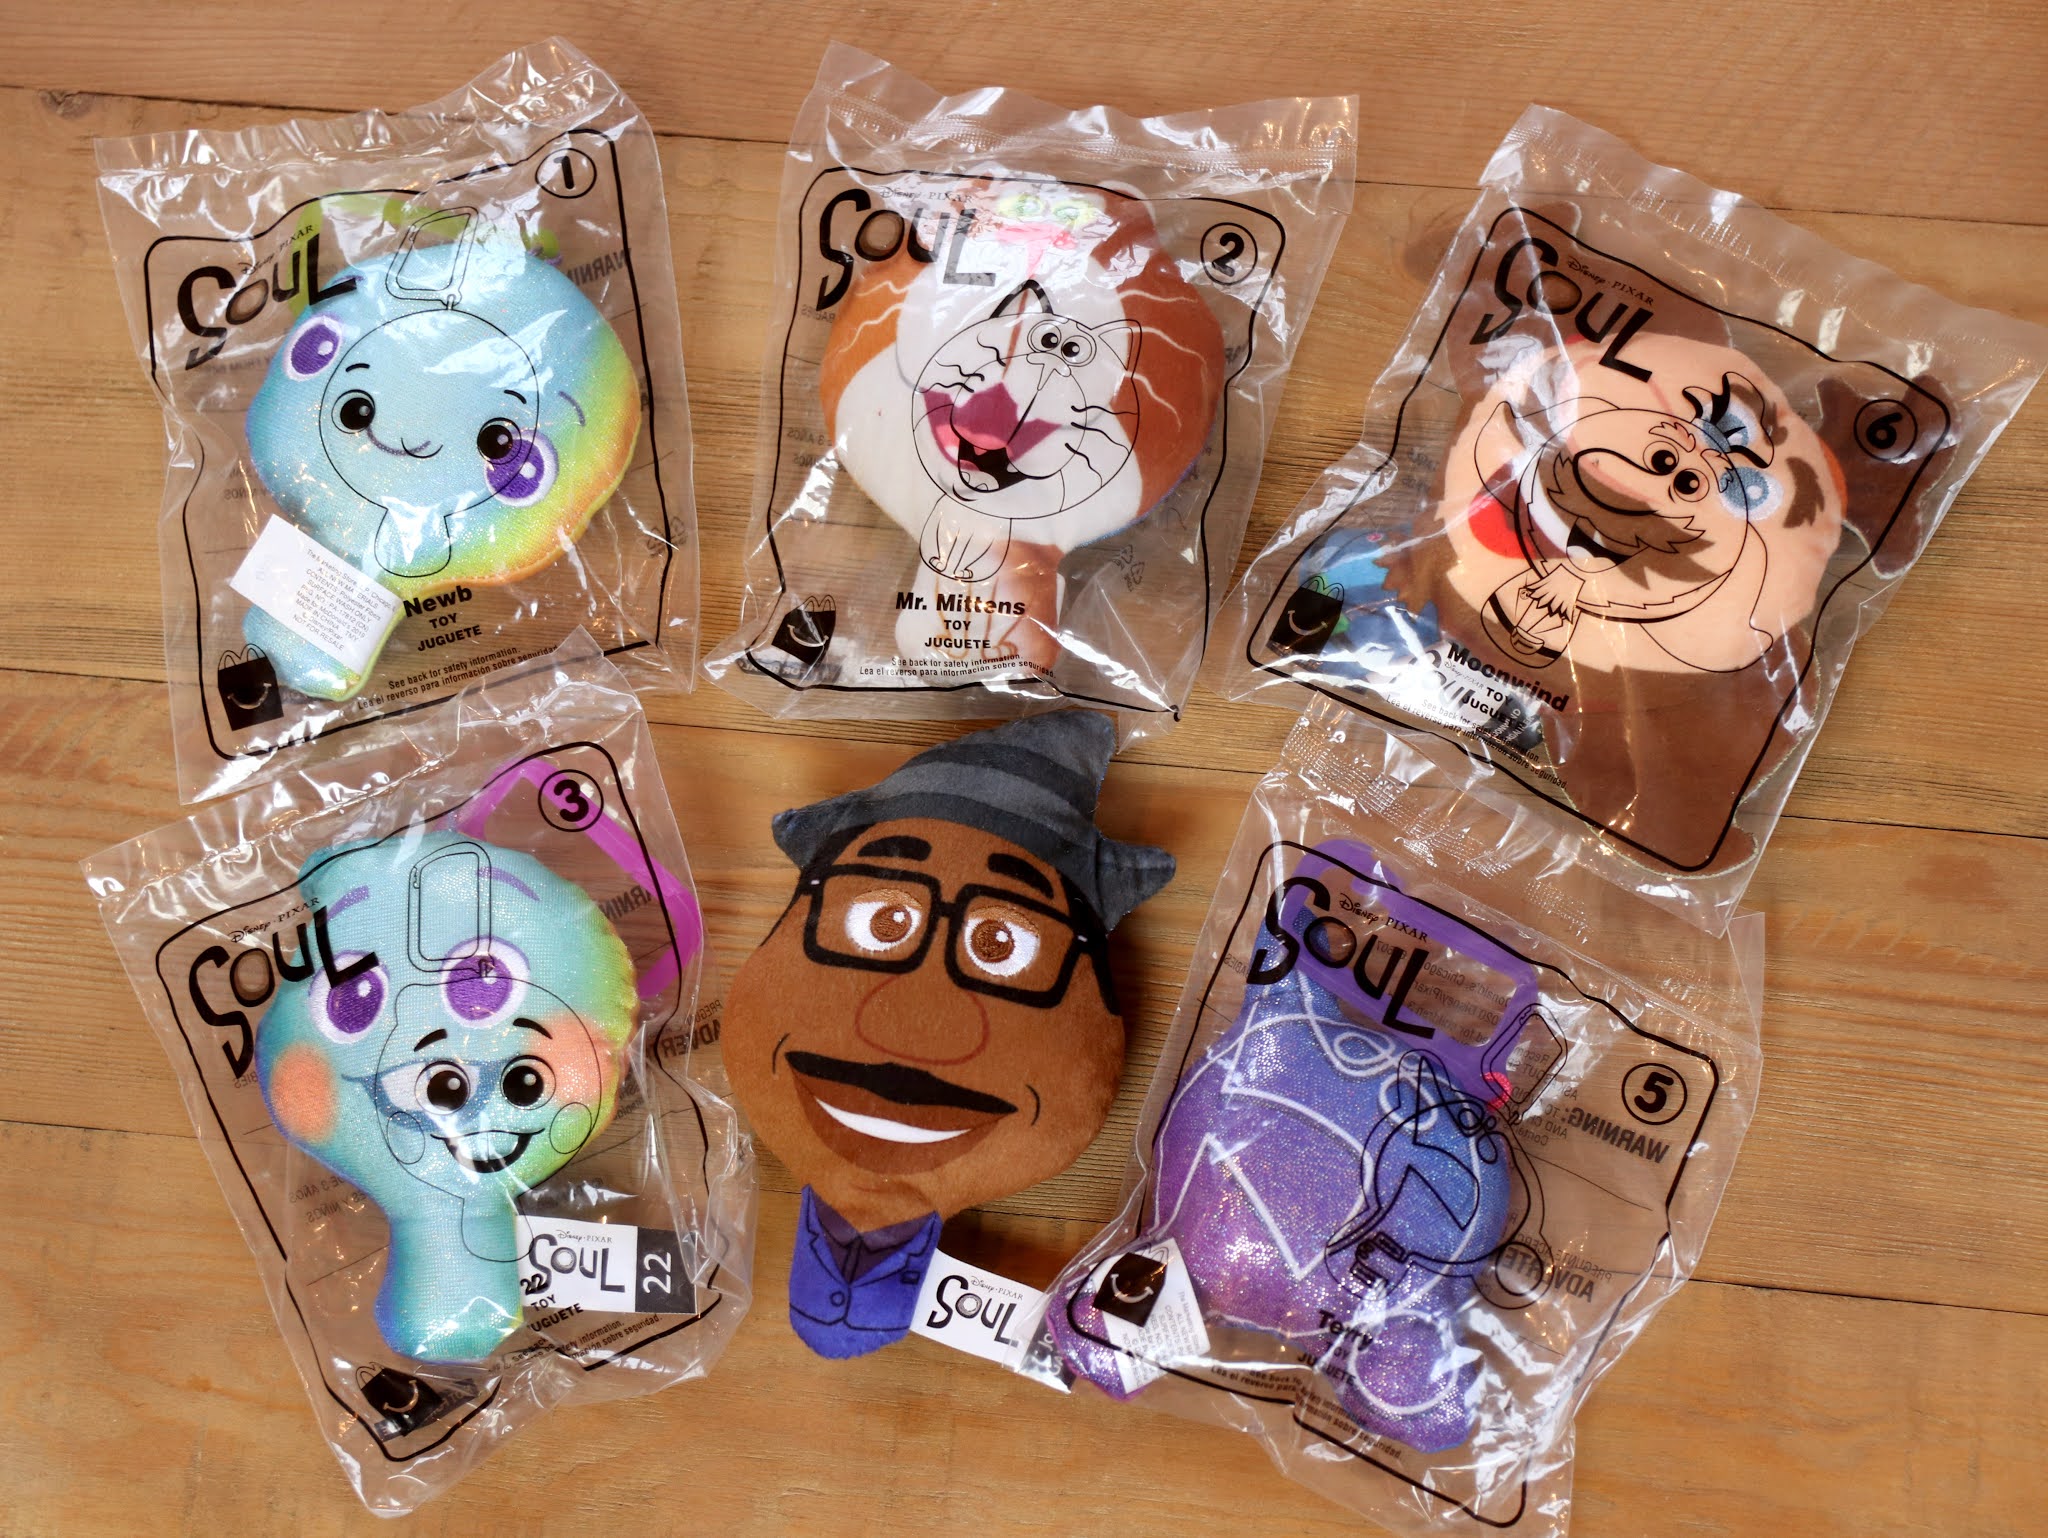 2020 McDONALD'S Disney Pixar SOUL Plush HAPPY MEAL TOYS Choose Toy or Set 